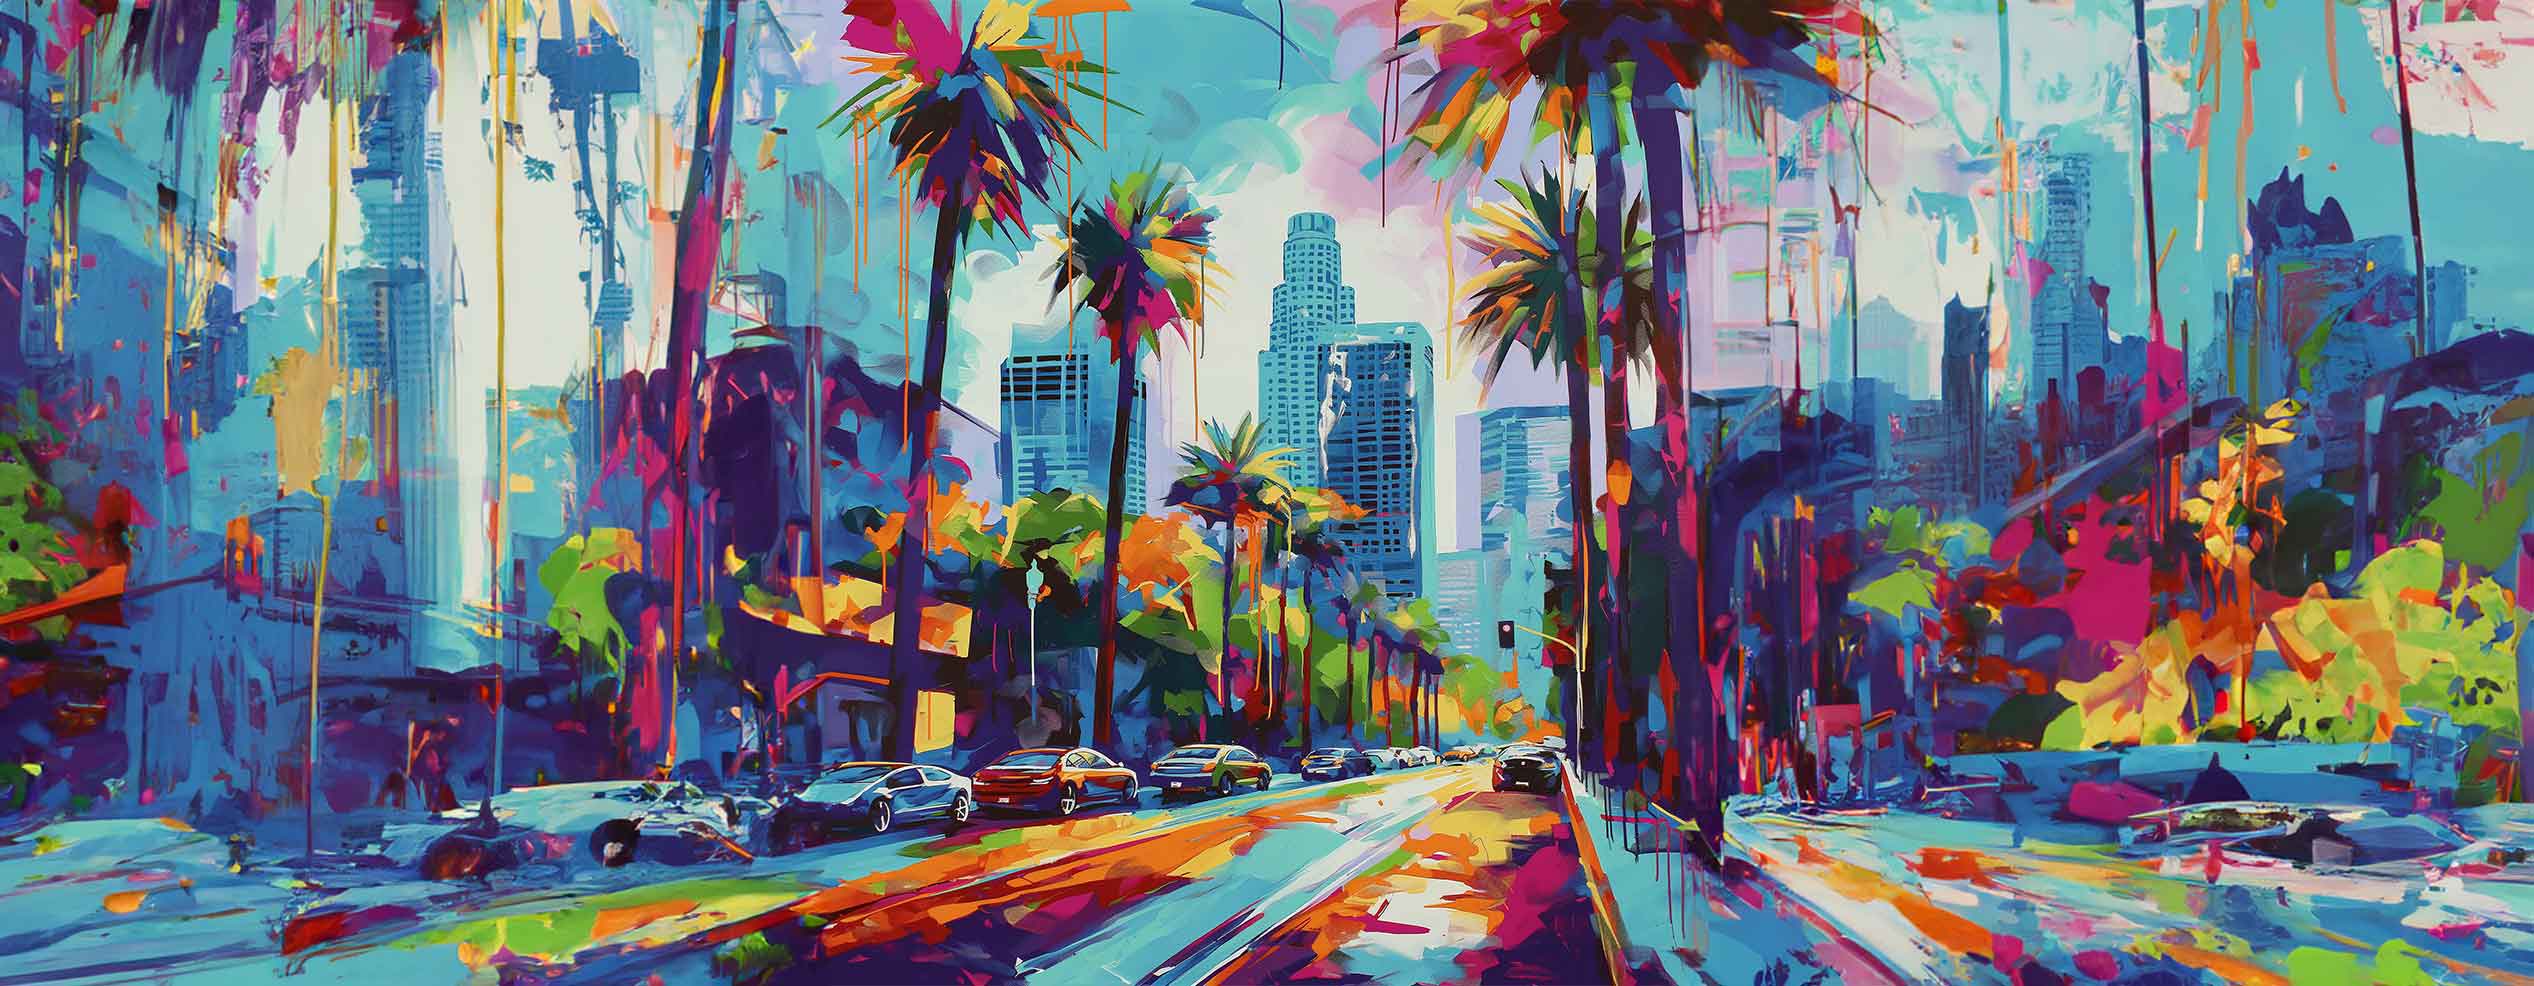 Los Angeles art